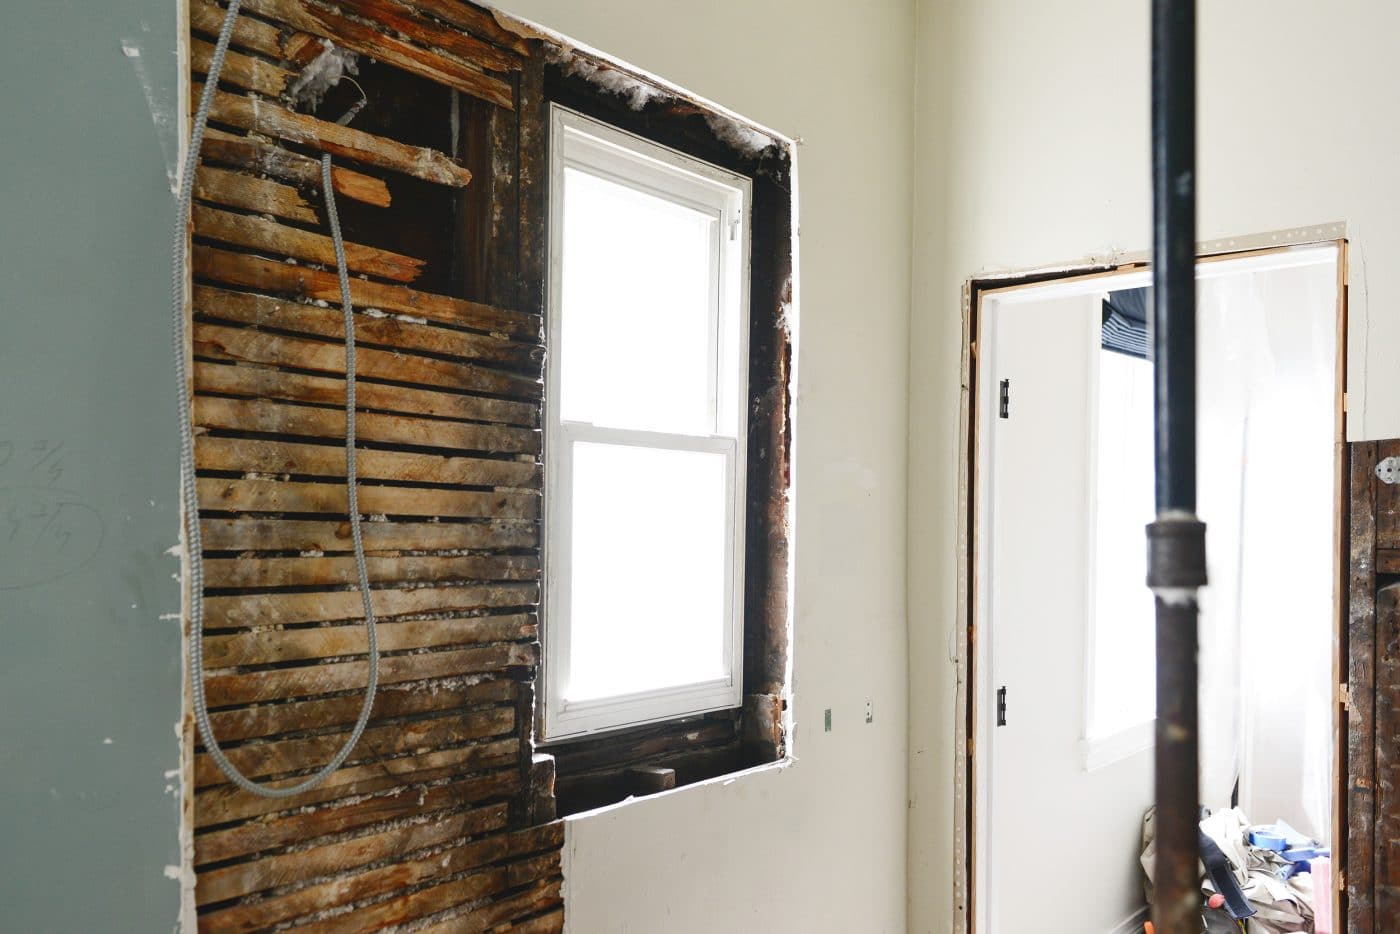 our bathroom renovation, plus plans and progress | via Yellow Brick Home